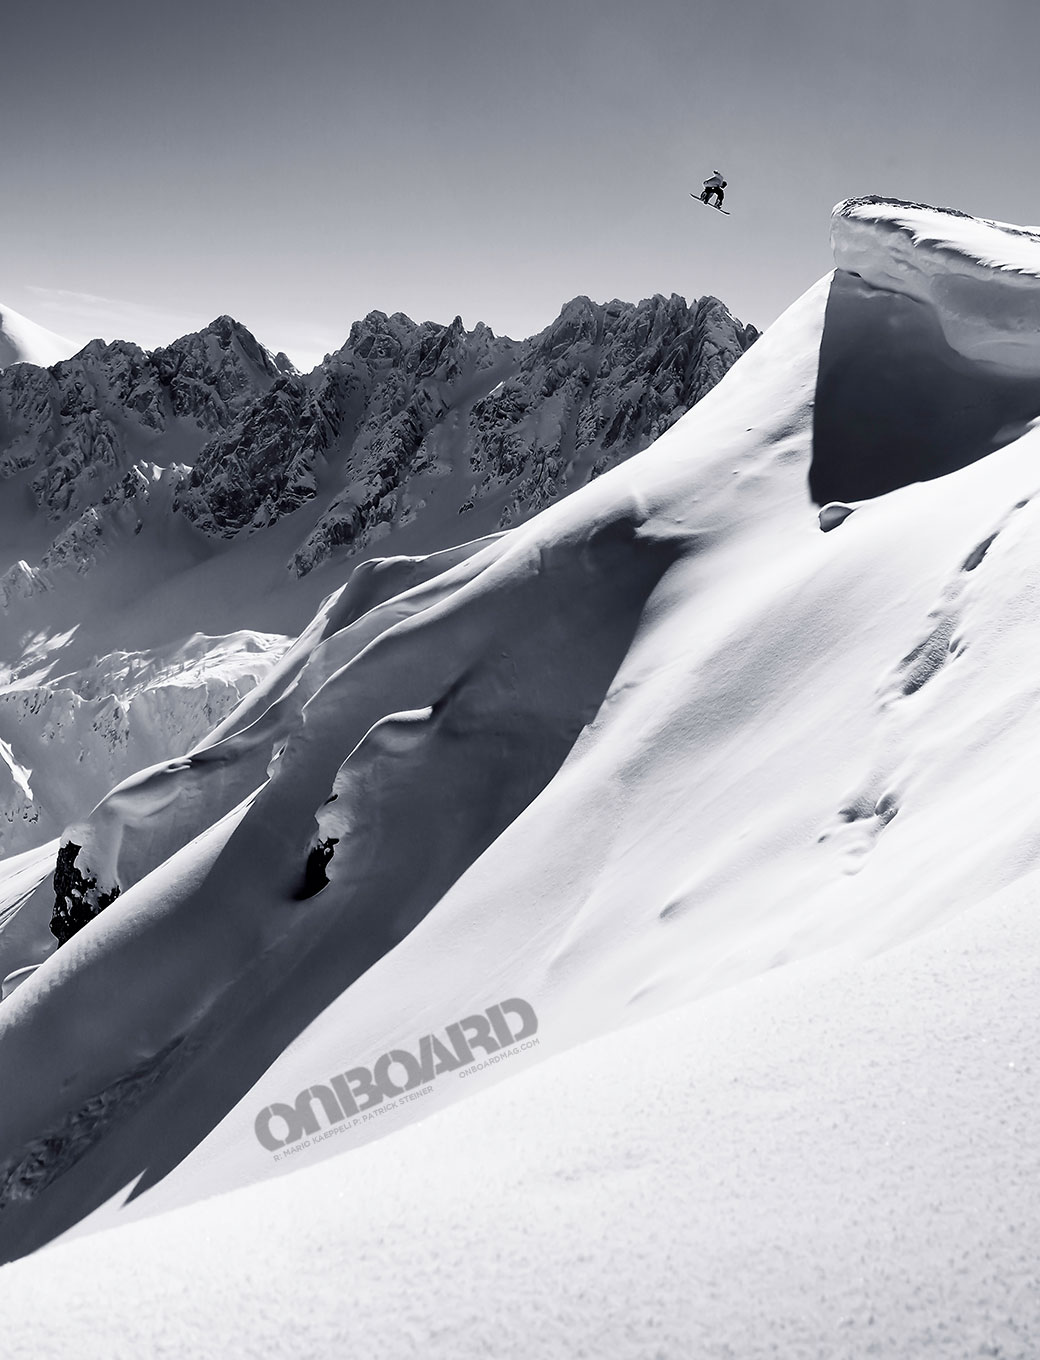 Snowboard Wallpaper Mario Kaeppeli Tyrol iPhone4